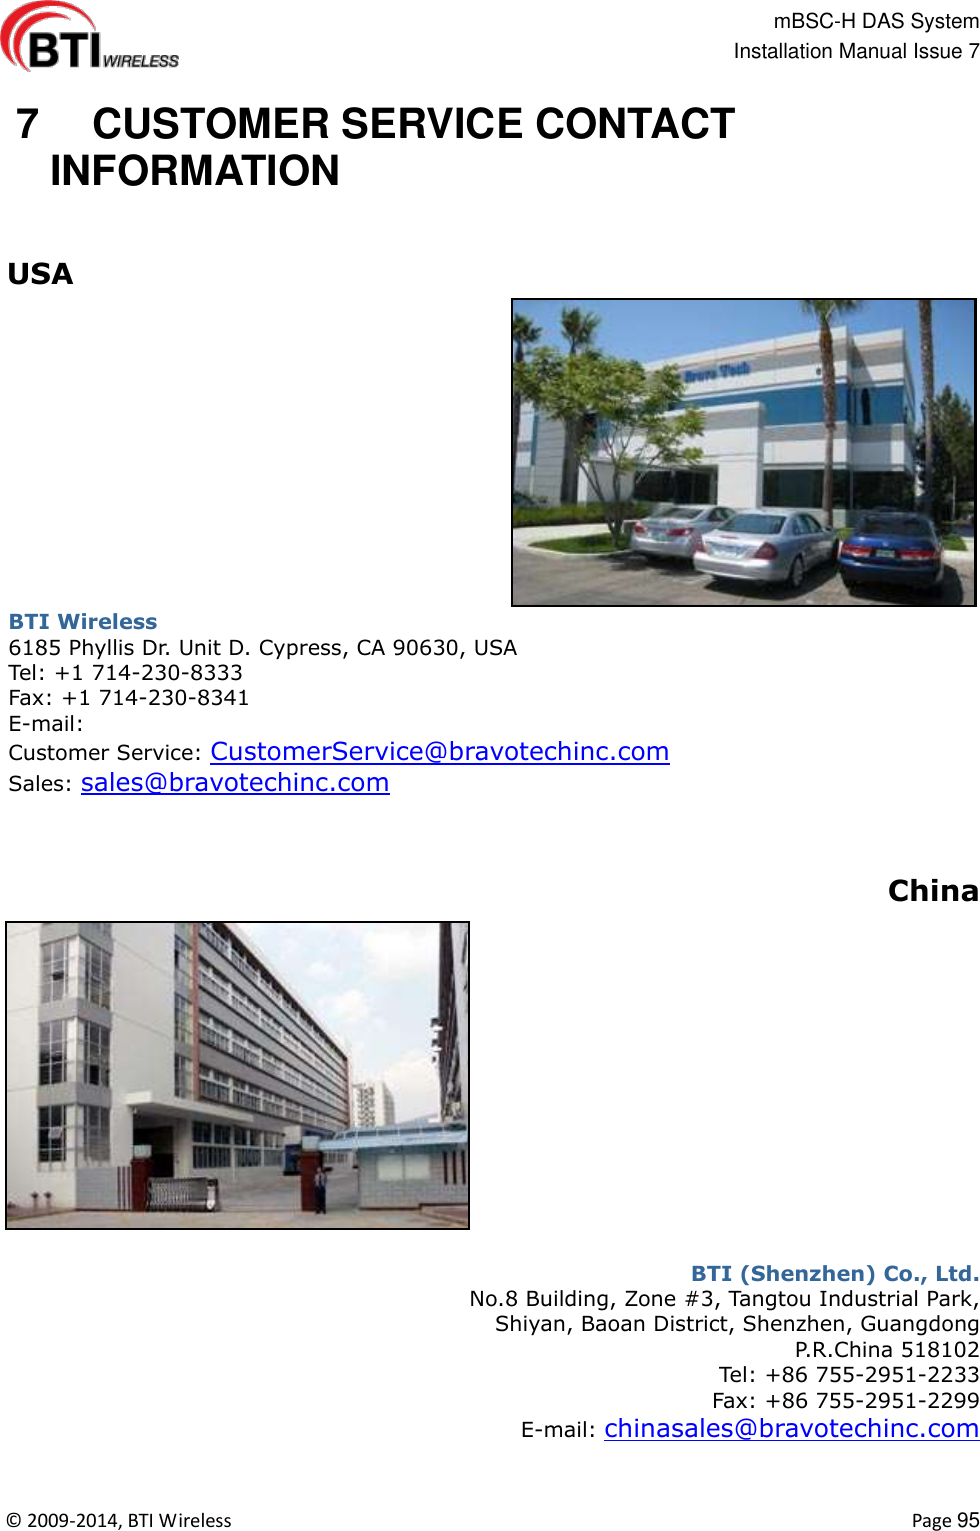                                                   mBSC-H DAS System   Installation Manual Issue 7  ©  2009-2014, BTI Wireless    Page 95   7   CUSTOMER SERVICE CONTACT INFORMATION   USA BTI Wireless 6185 Phyllis Dr. Unit D. Cypress, CA 90630, USA Tel: +1 714-230-8333 Fax: +1 714-230-8341 E-mail: Customer Service: CustomerService@bravotechinc.com Sales: sales@bravotechinc.com    China  BTI (Shenzhen) Co., Ltd. No.8 Building, Zone #3, Tangtou Industrial Park,   Shiyan, Baoan District, Shenzhen, Guangdong P.R.China 518102 Tel: +86 755-2951-2233   Fax: +86 755-2951-2299   E-mail: chinasales@bravotechinc.com 